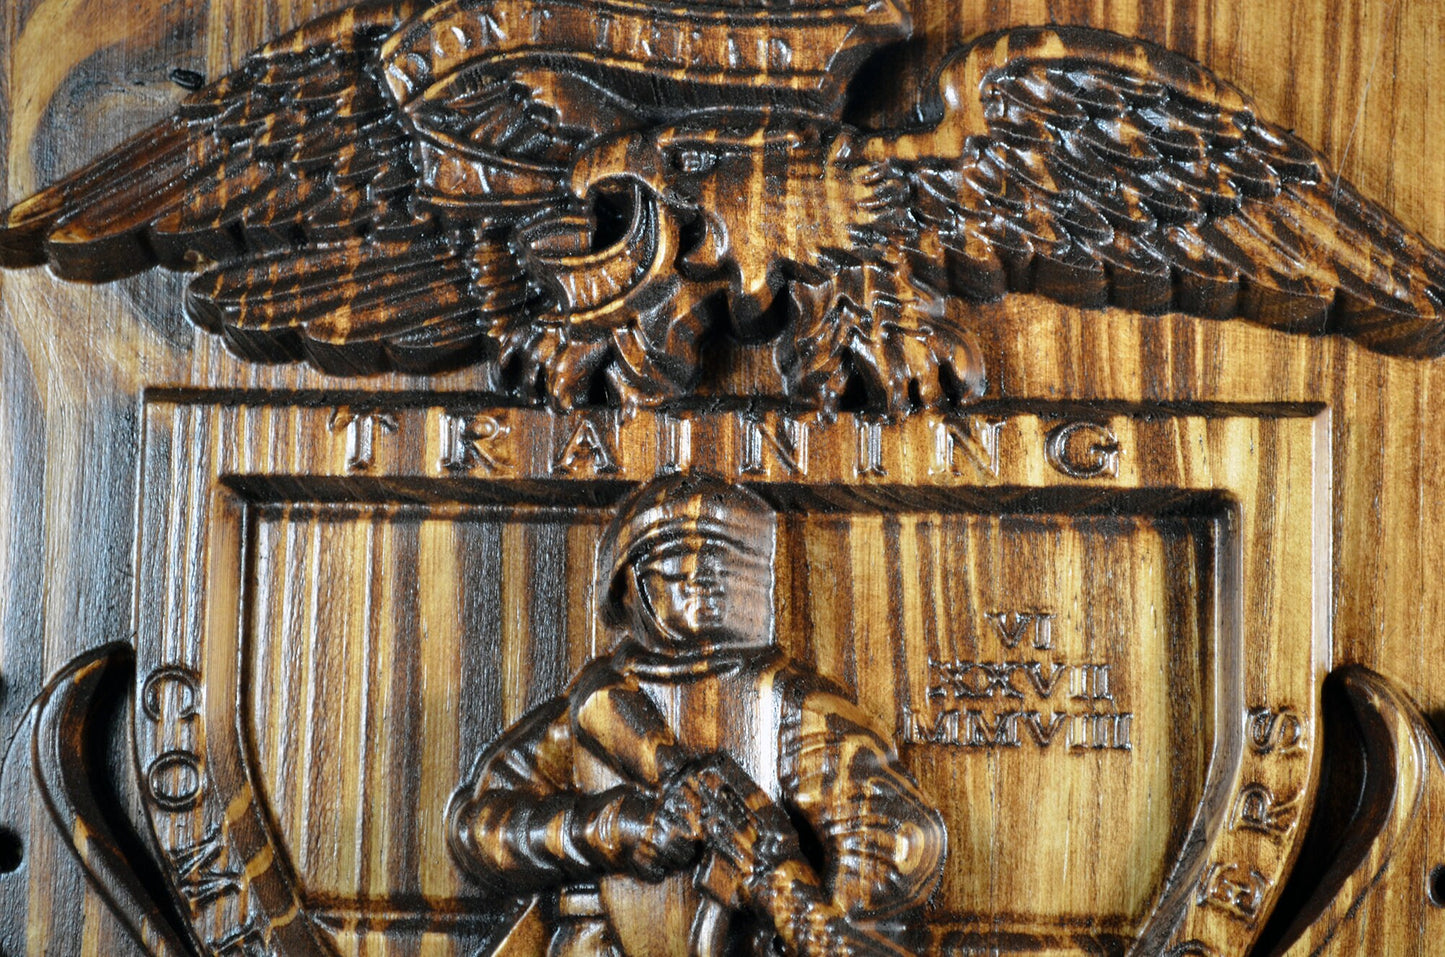 USMC Advanced Infantry Training Battalion East, US Marine Corps, military plaque